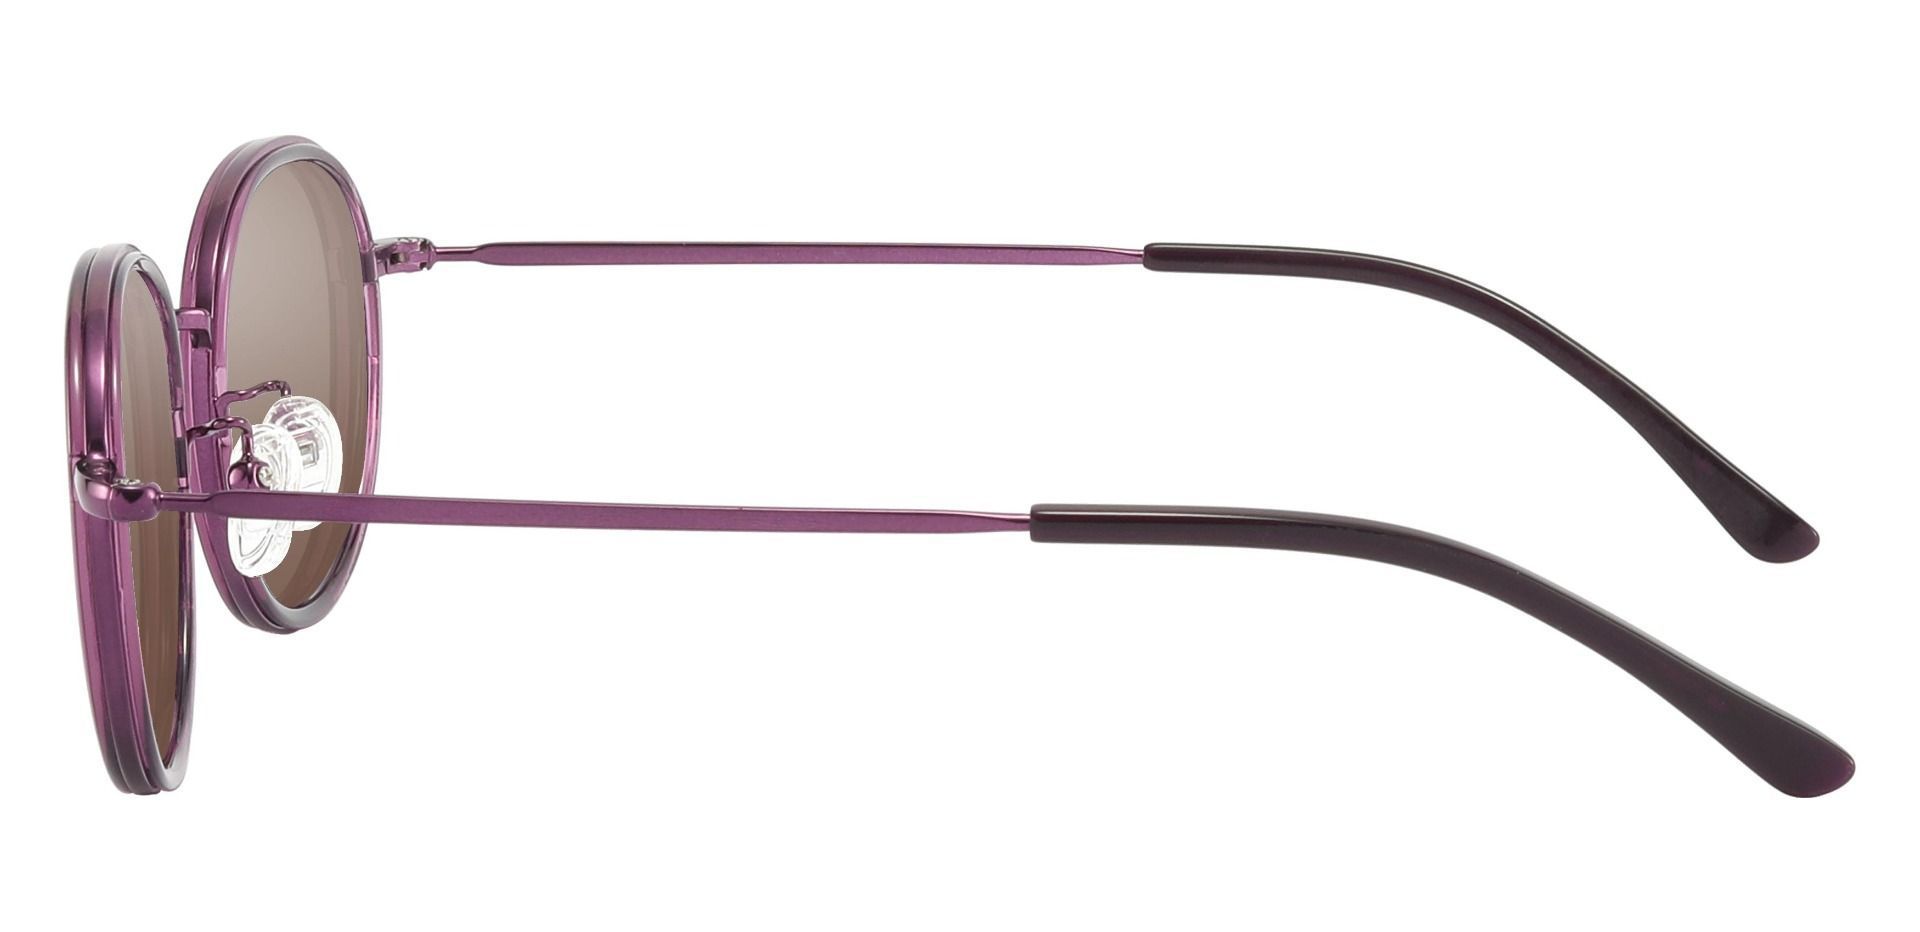 Eden Round Non-Rx Sunglasses - Purple Frame With Brown Lenses